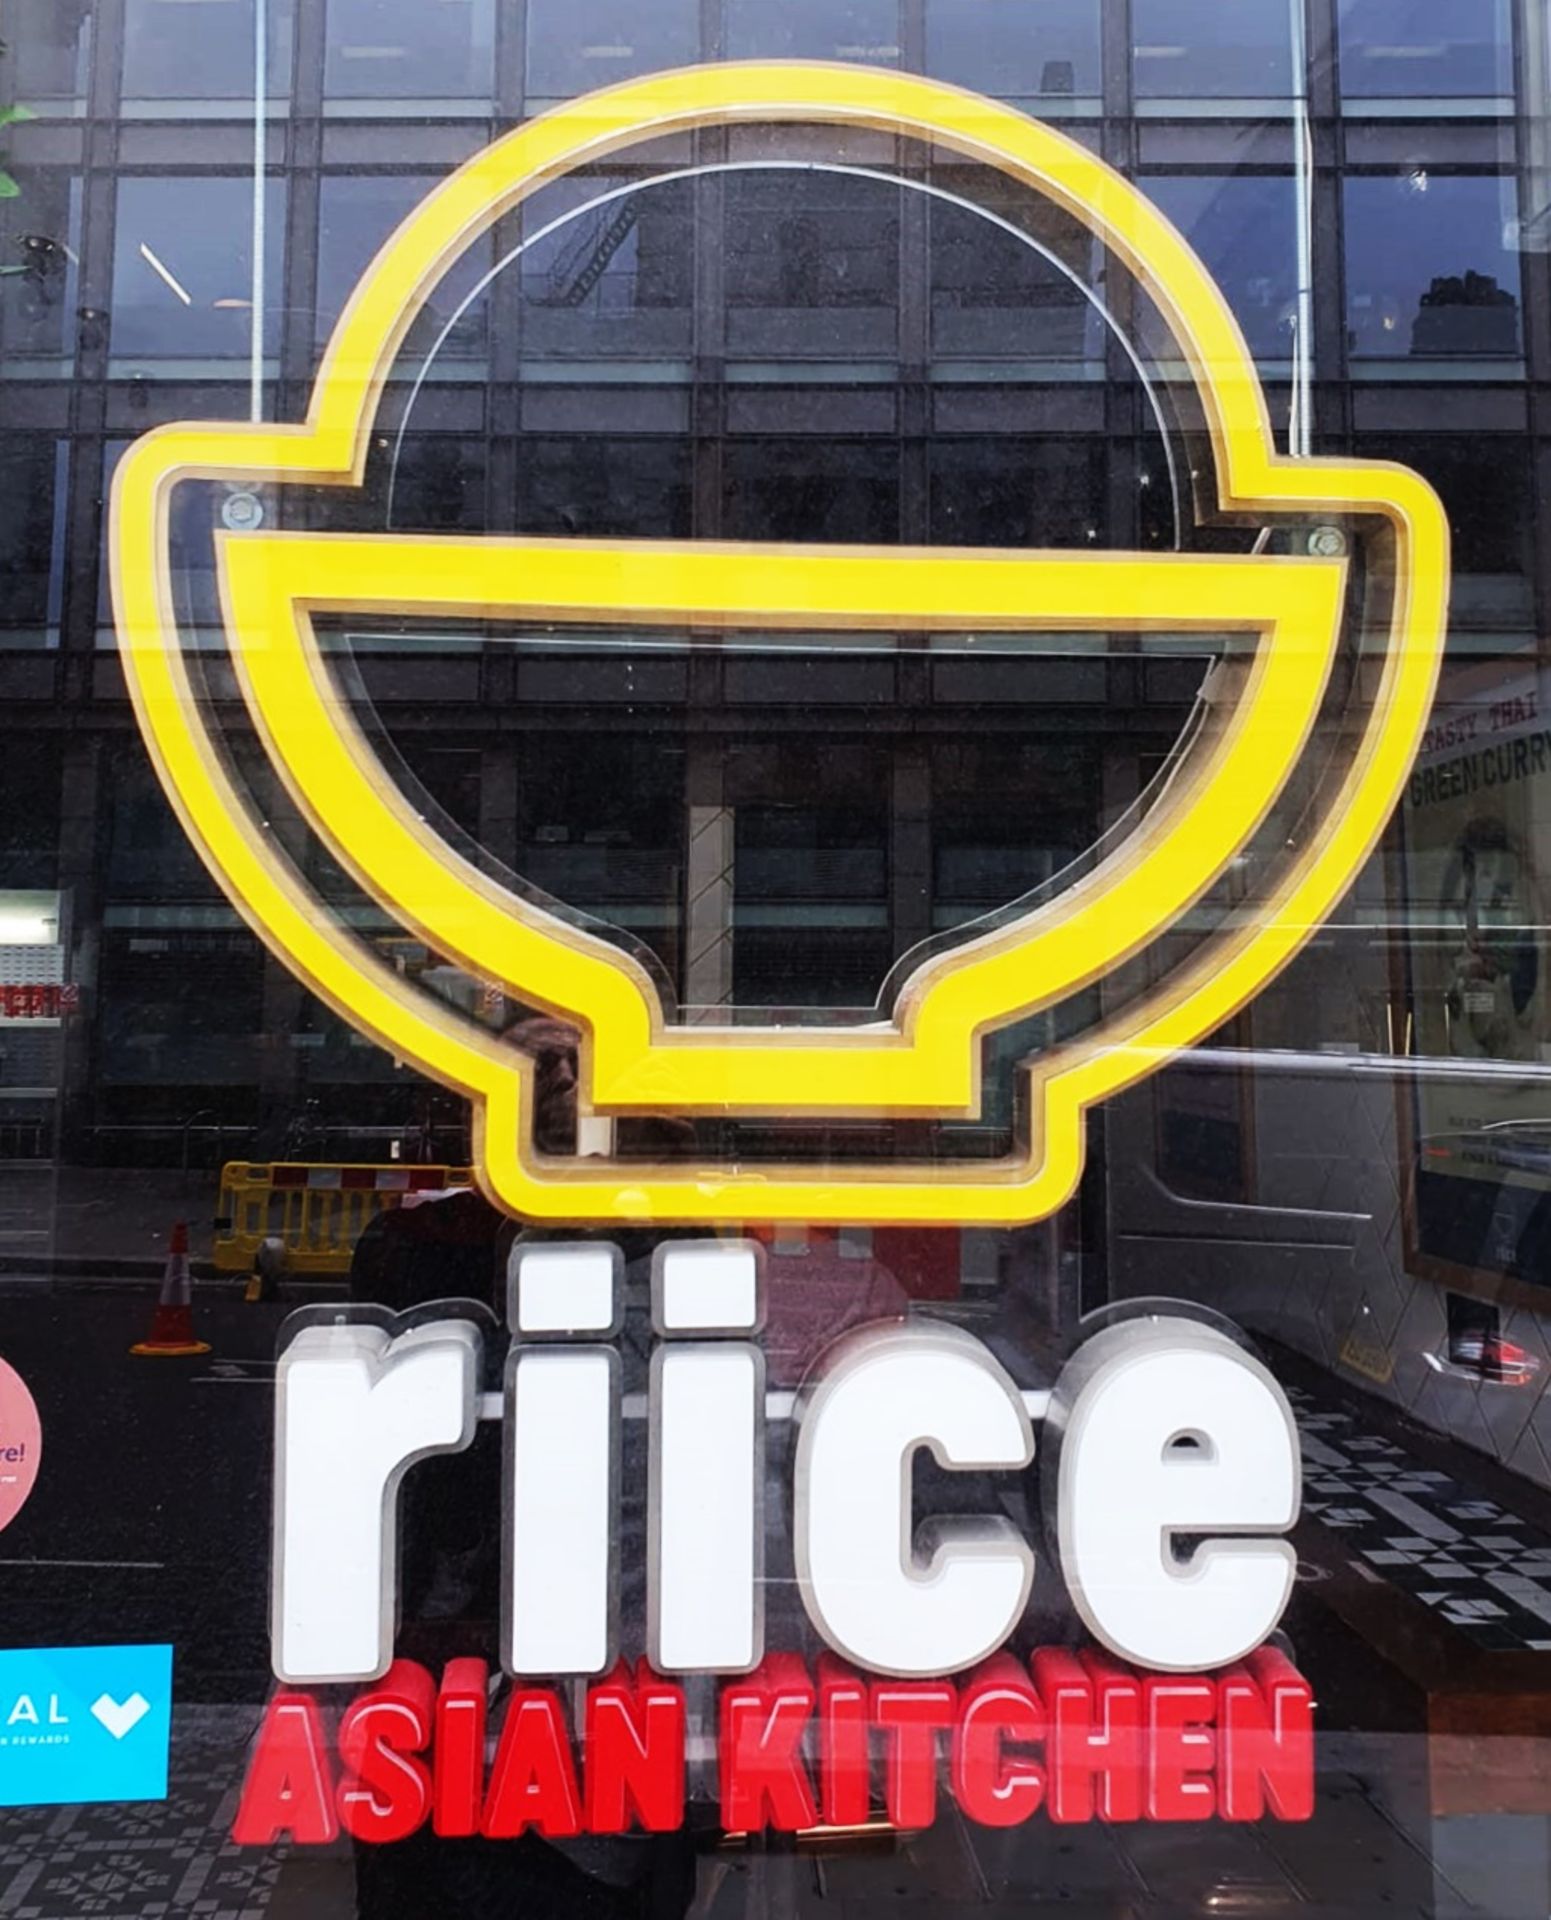 1 x Illuminated Window Sign With Transformer - Riice Asian Kitchen With Logo - Size H110 x W88 x